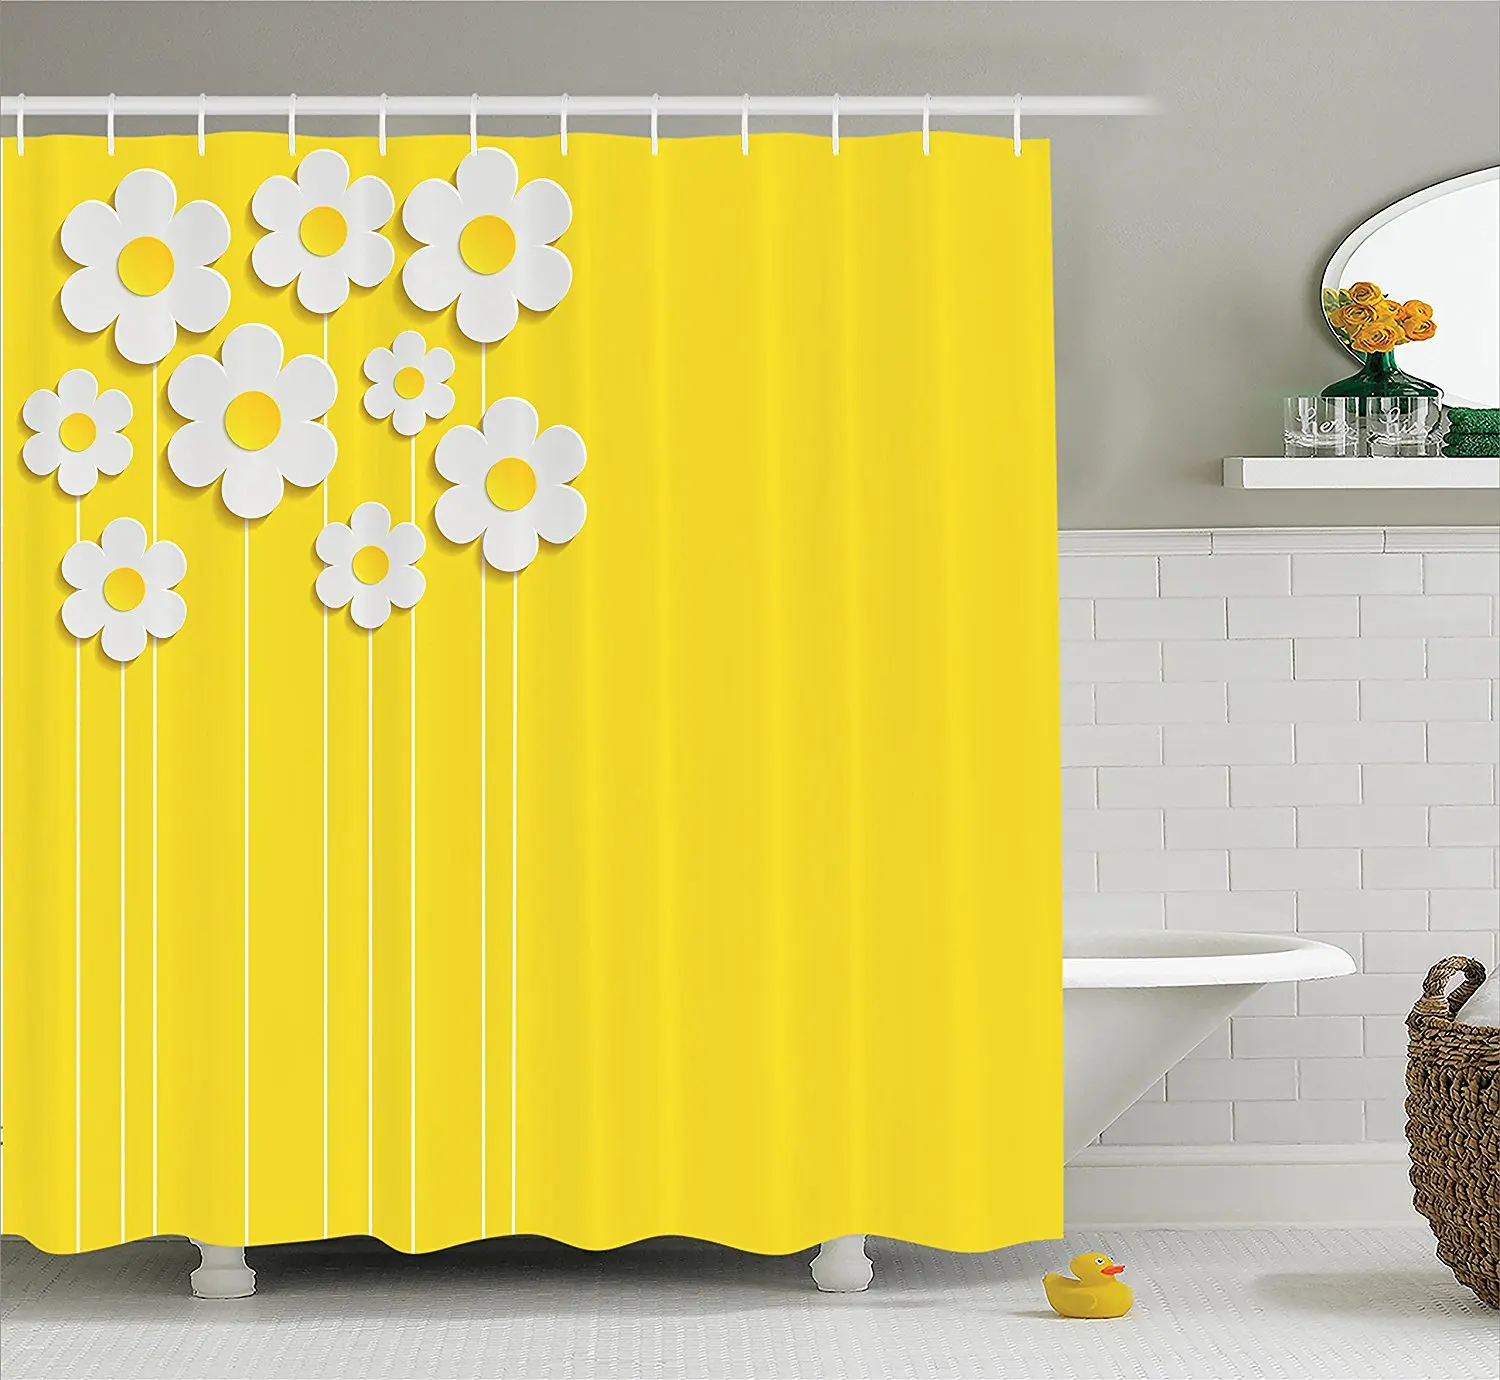 Green Leaves Yellow Daisy Flowers Bathroom Shower Curtain Set Waterproof Fabric